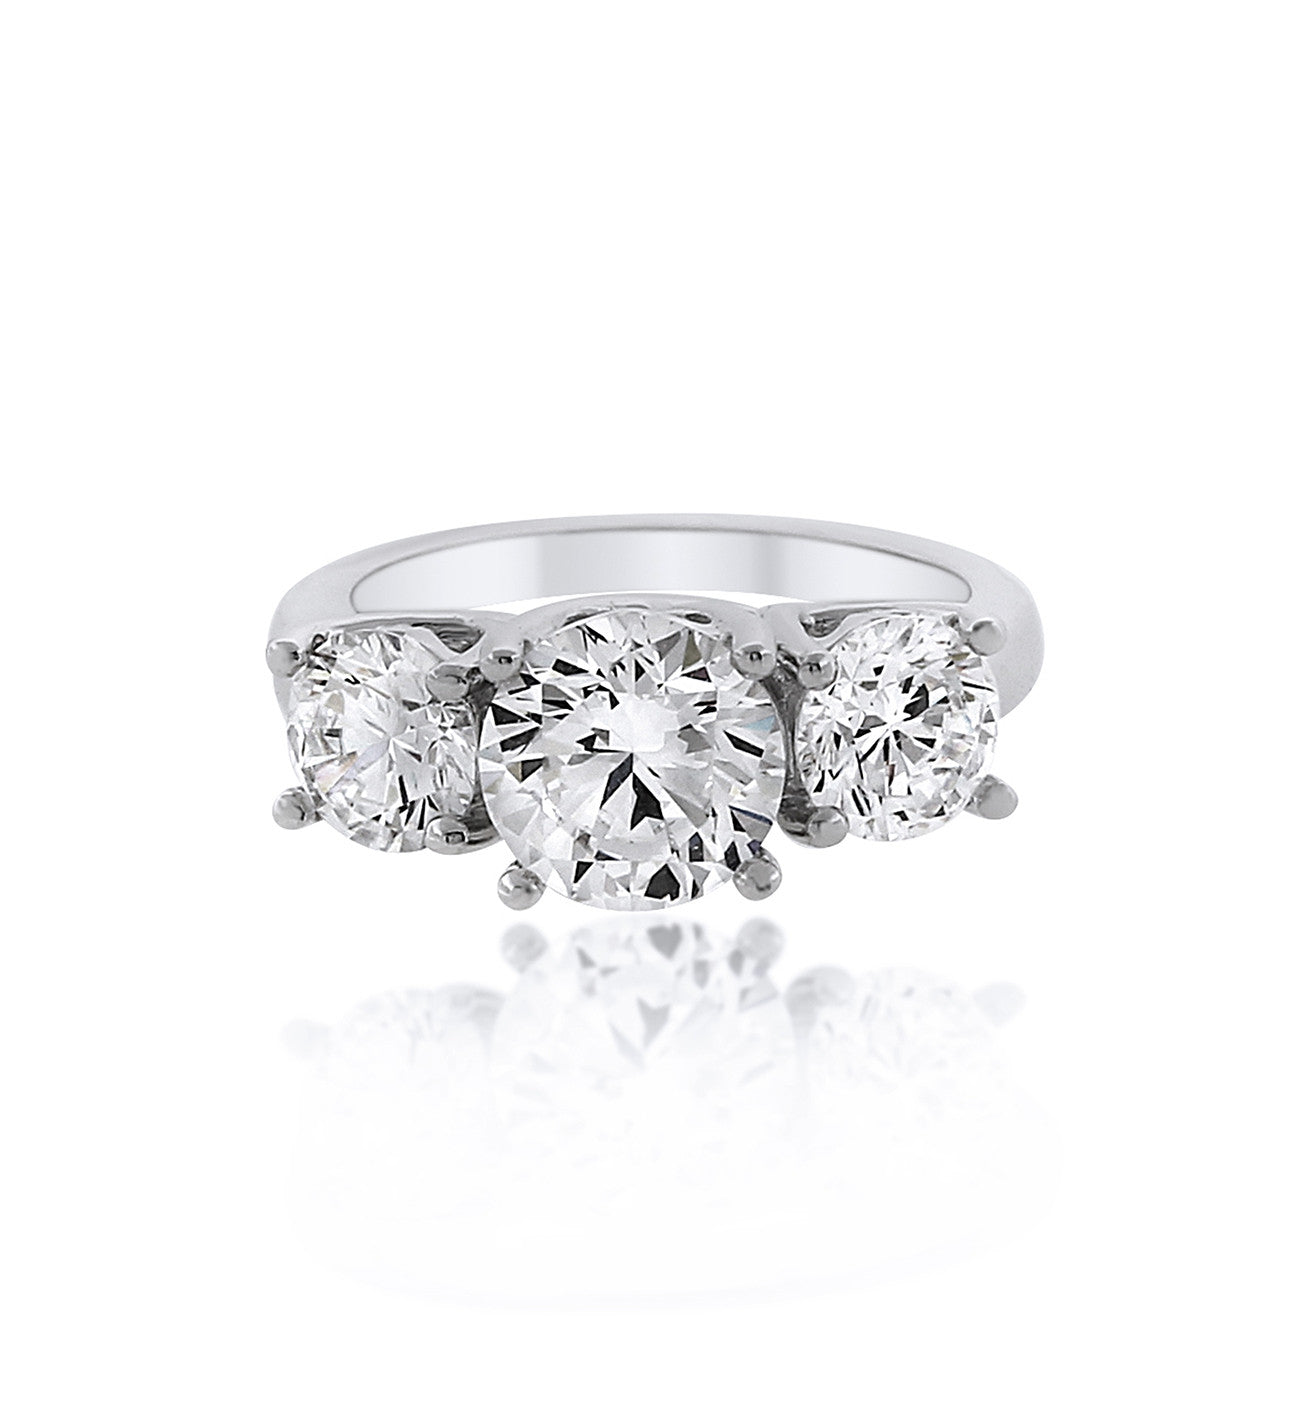 ruby ring price, ruby stone price, ruby rings online, surya ratna, red  stone, ruby stone ring, ceylon gems – CLARA